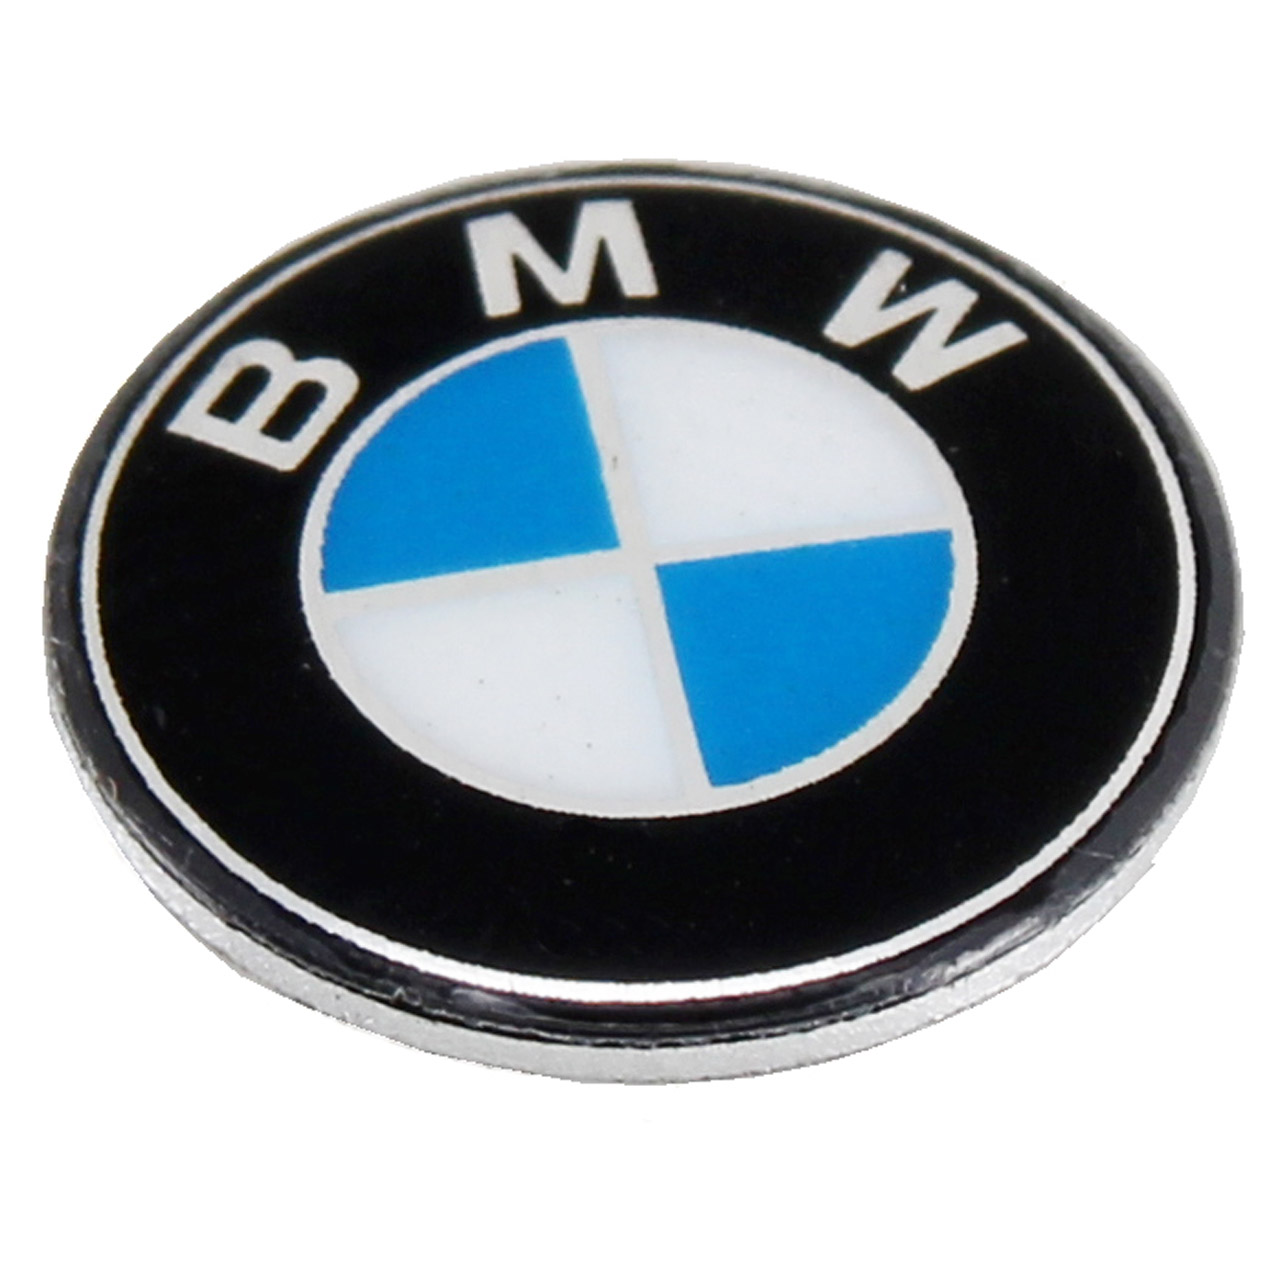 ORIGINAL BMW Schlüsselemblem Emblem Aufkleber für Schlüssel Ø 11mm 66122155754